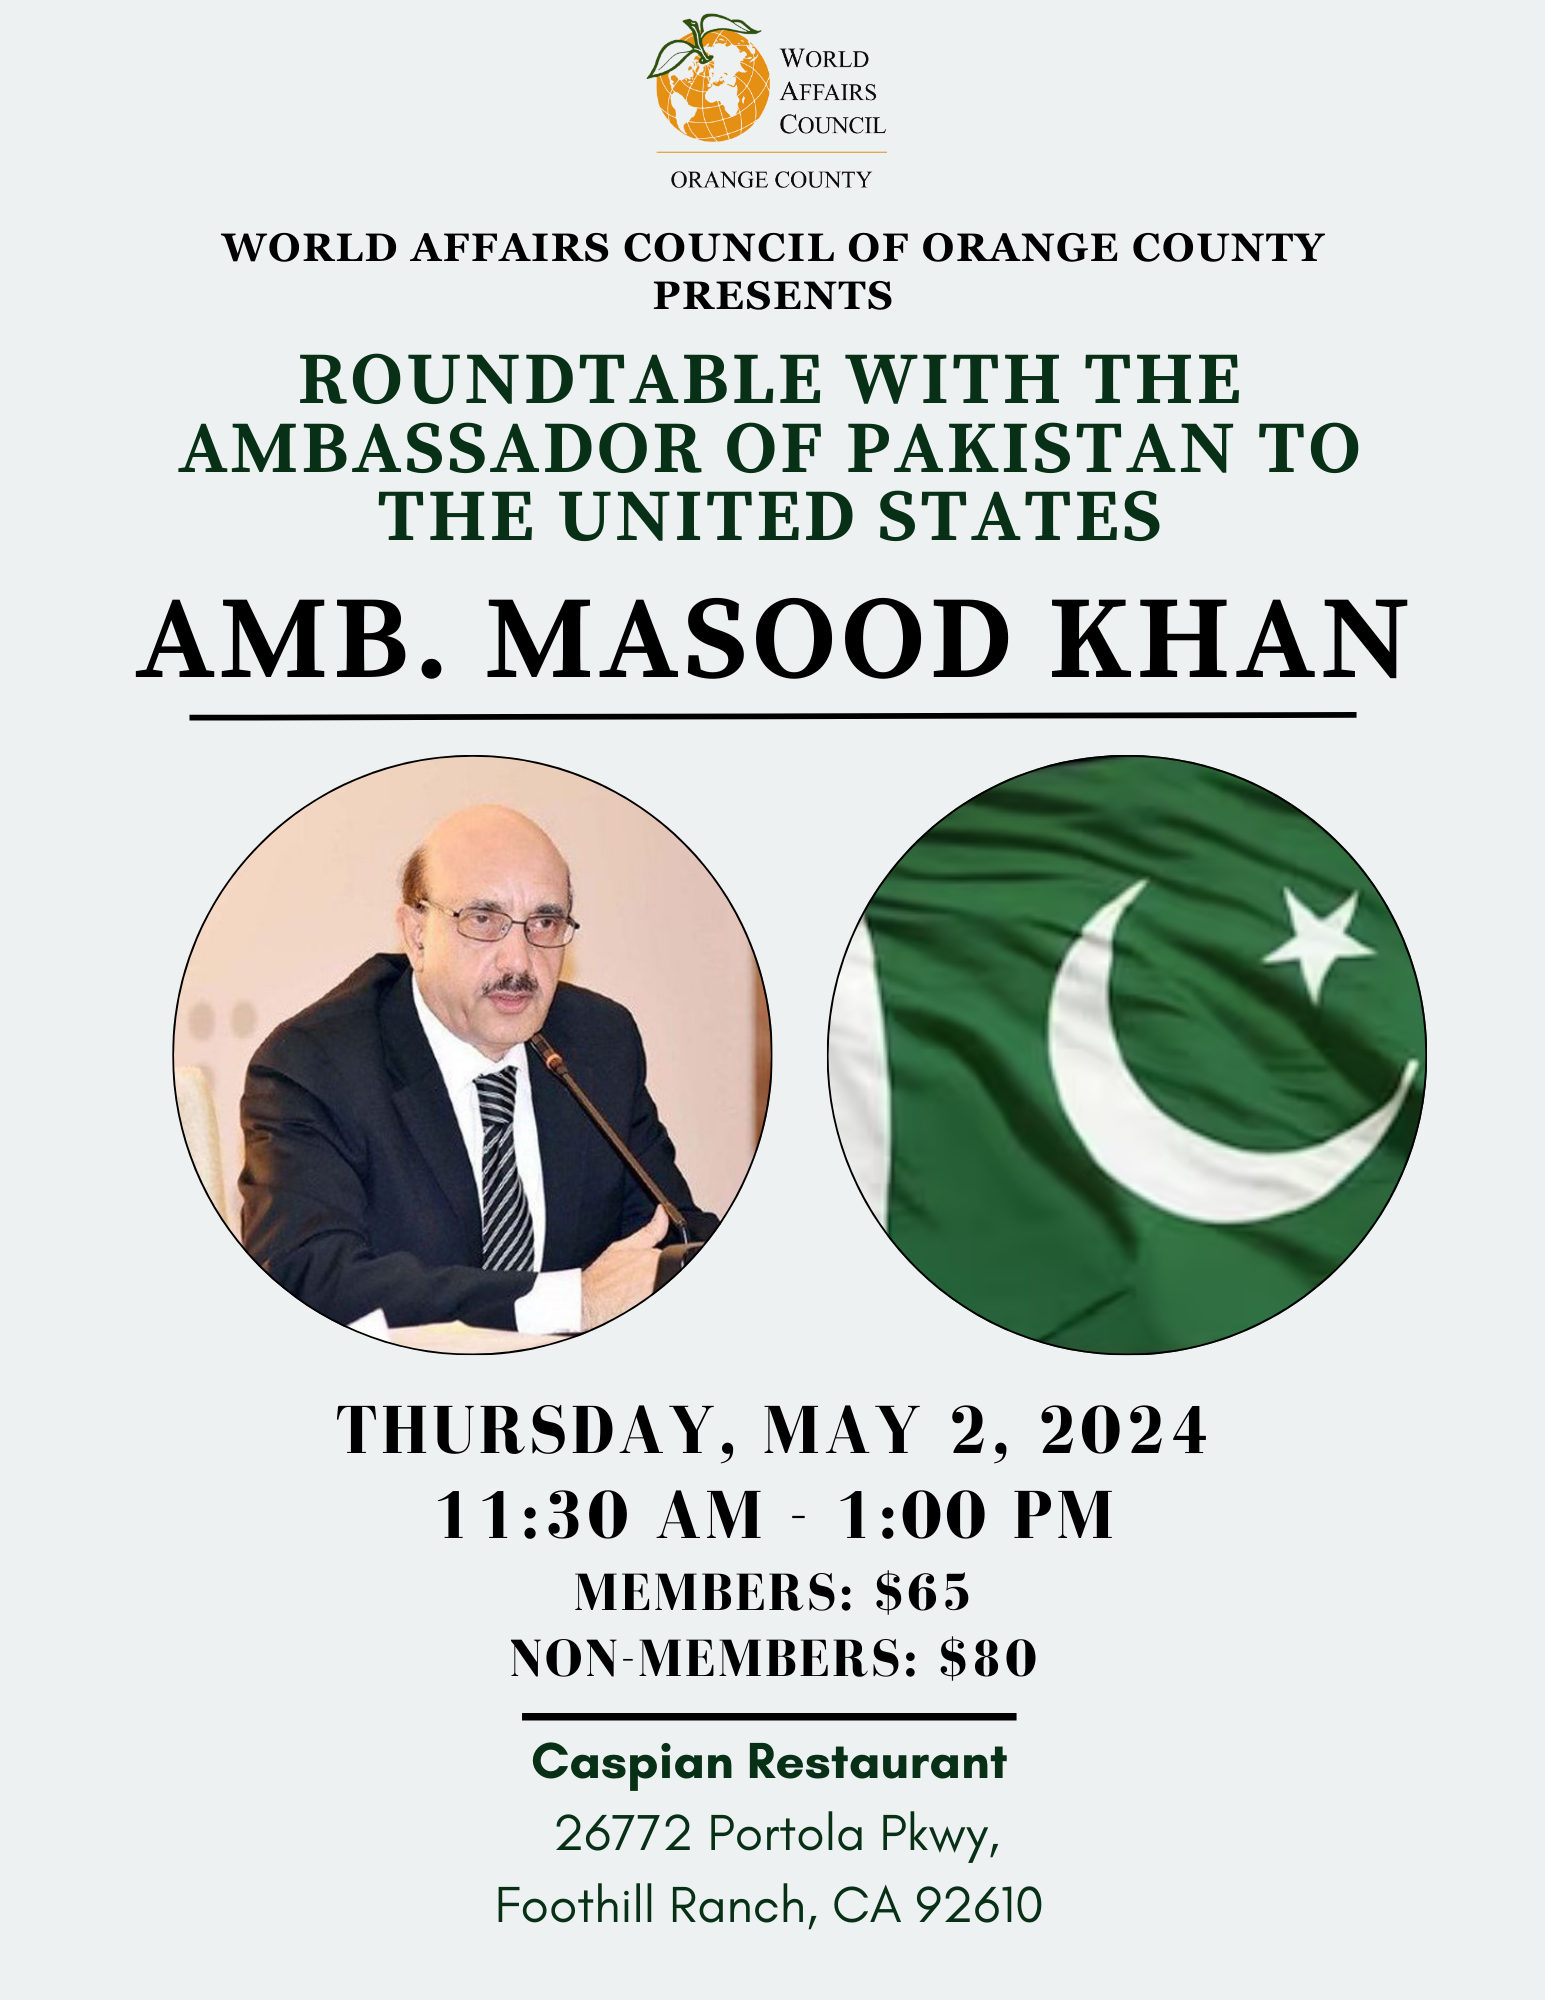 Ambassador of Pakistan to the U.S., Amb. Masood Khan